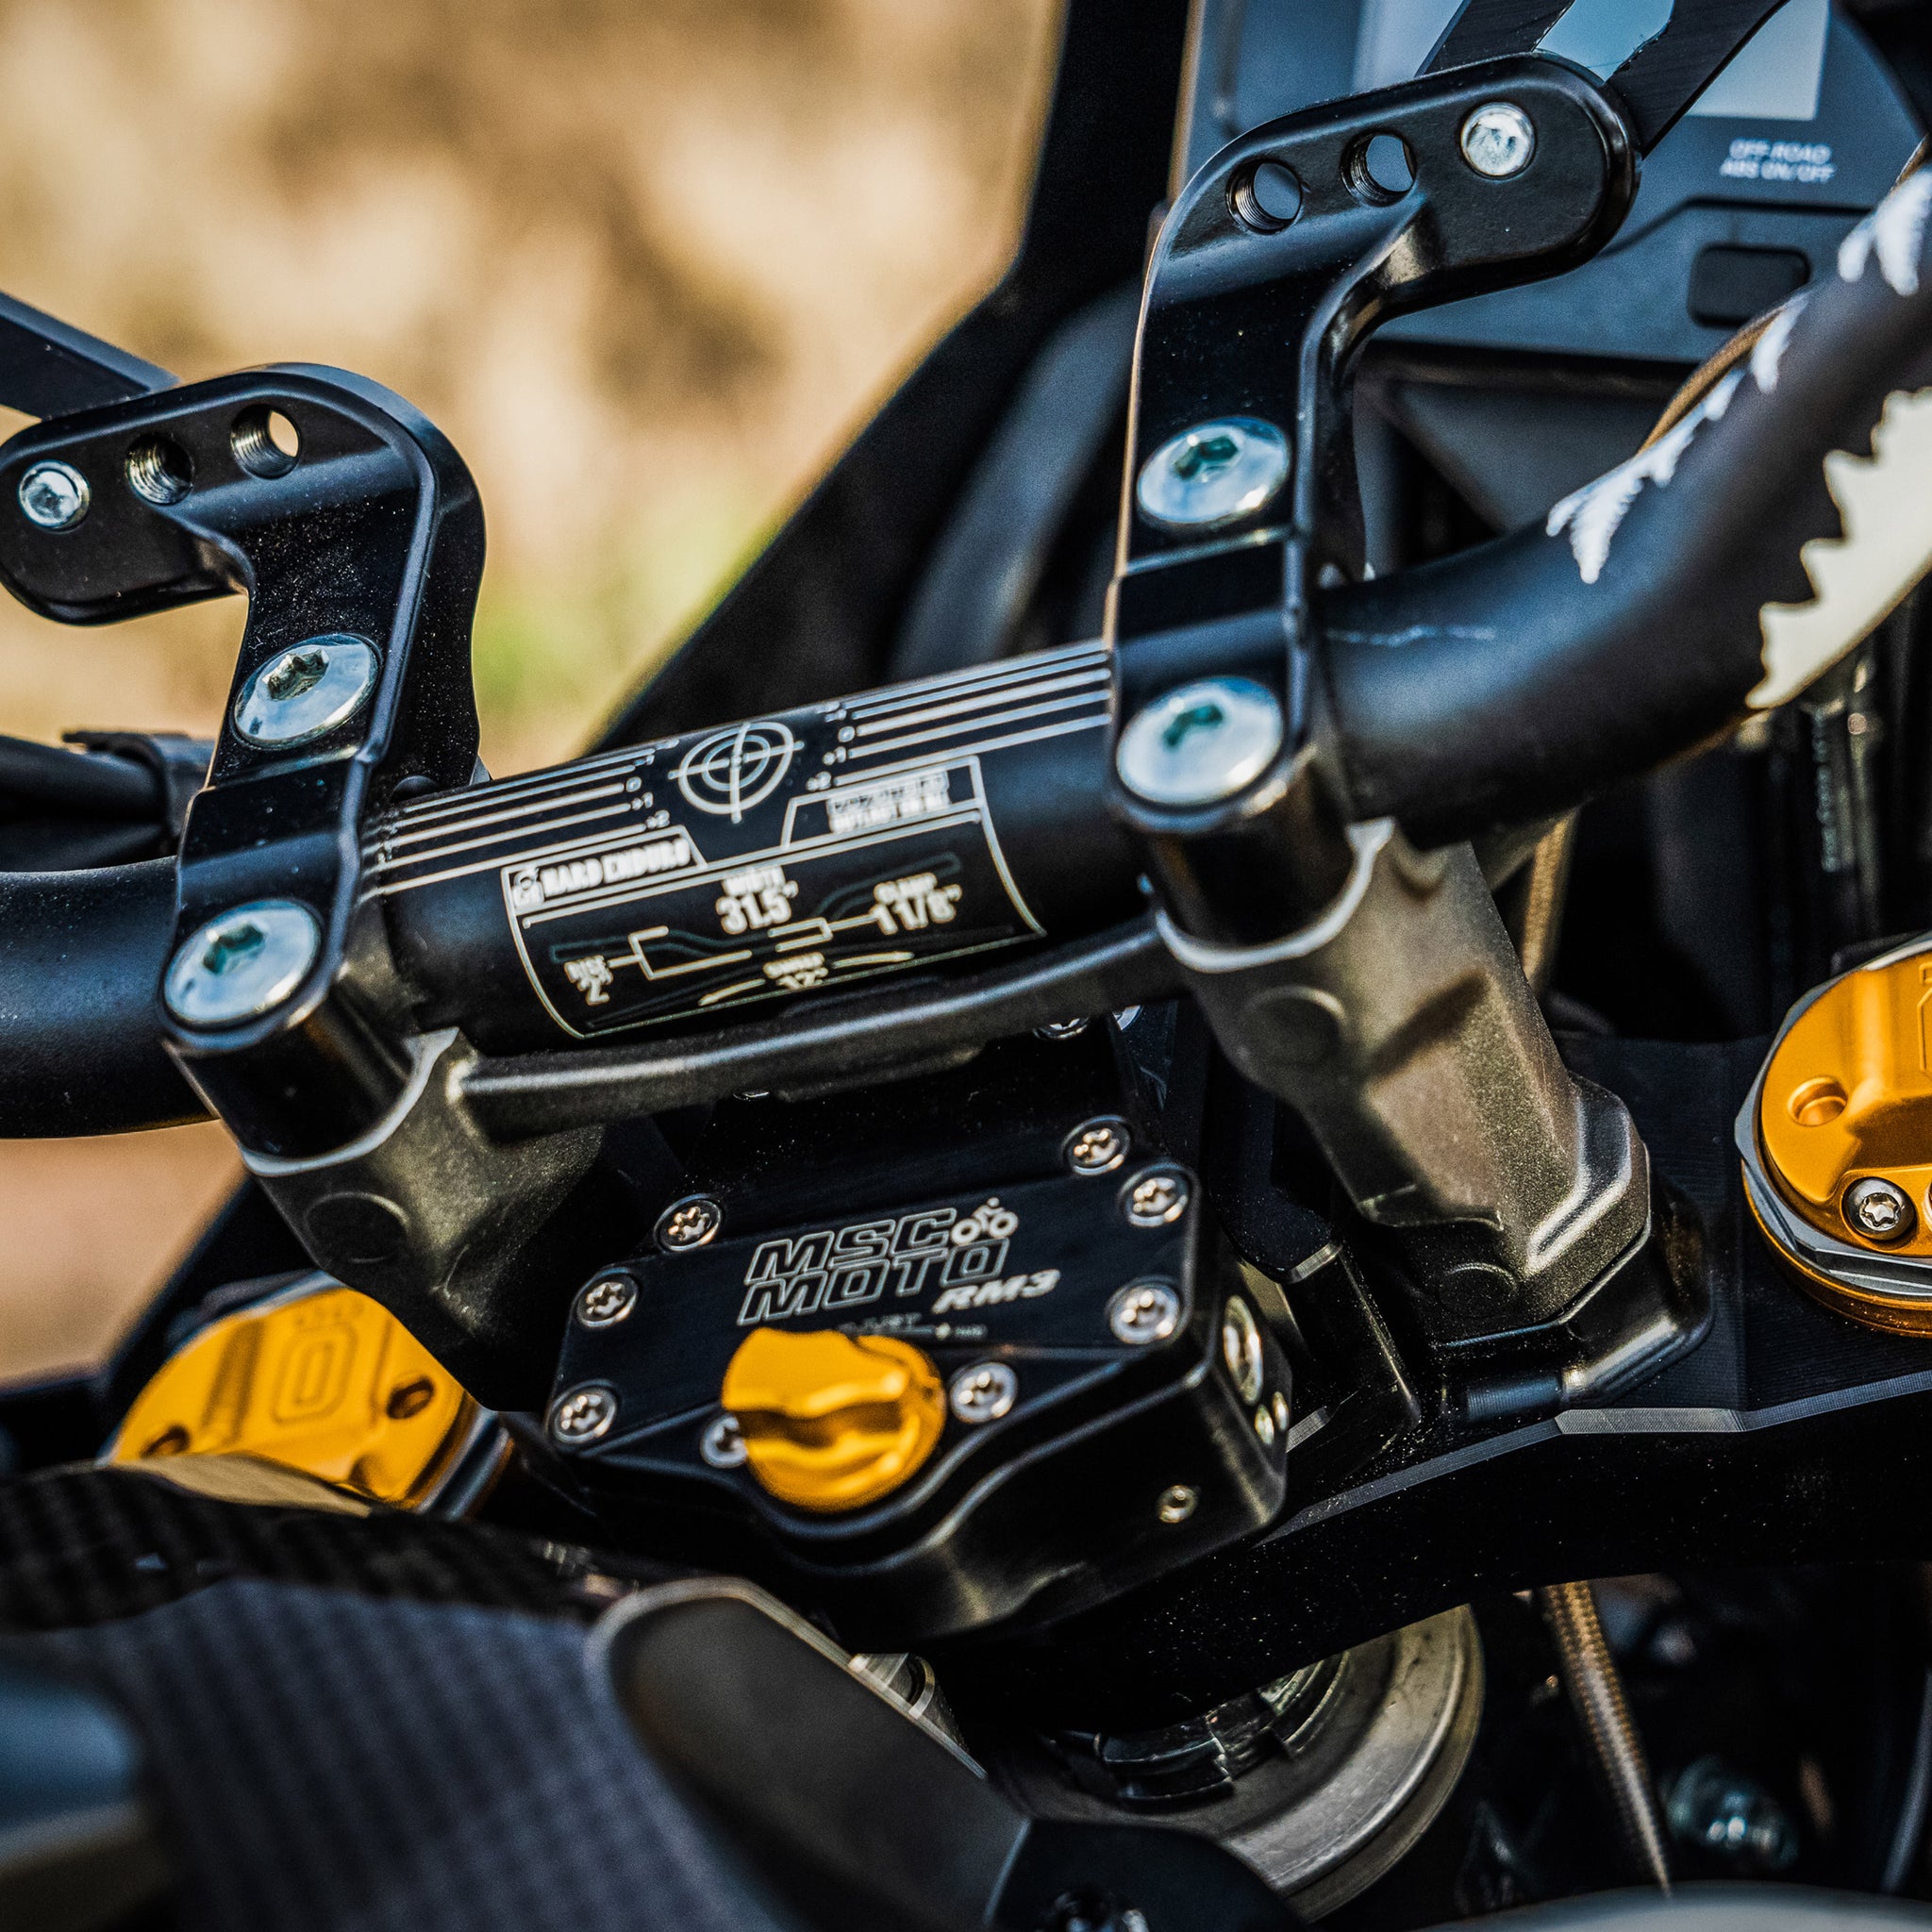 Yamaha Tenere 700 Steering Damper Kit - By TripleClamp Moto